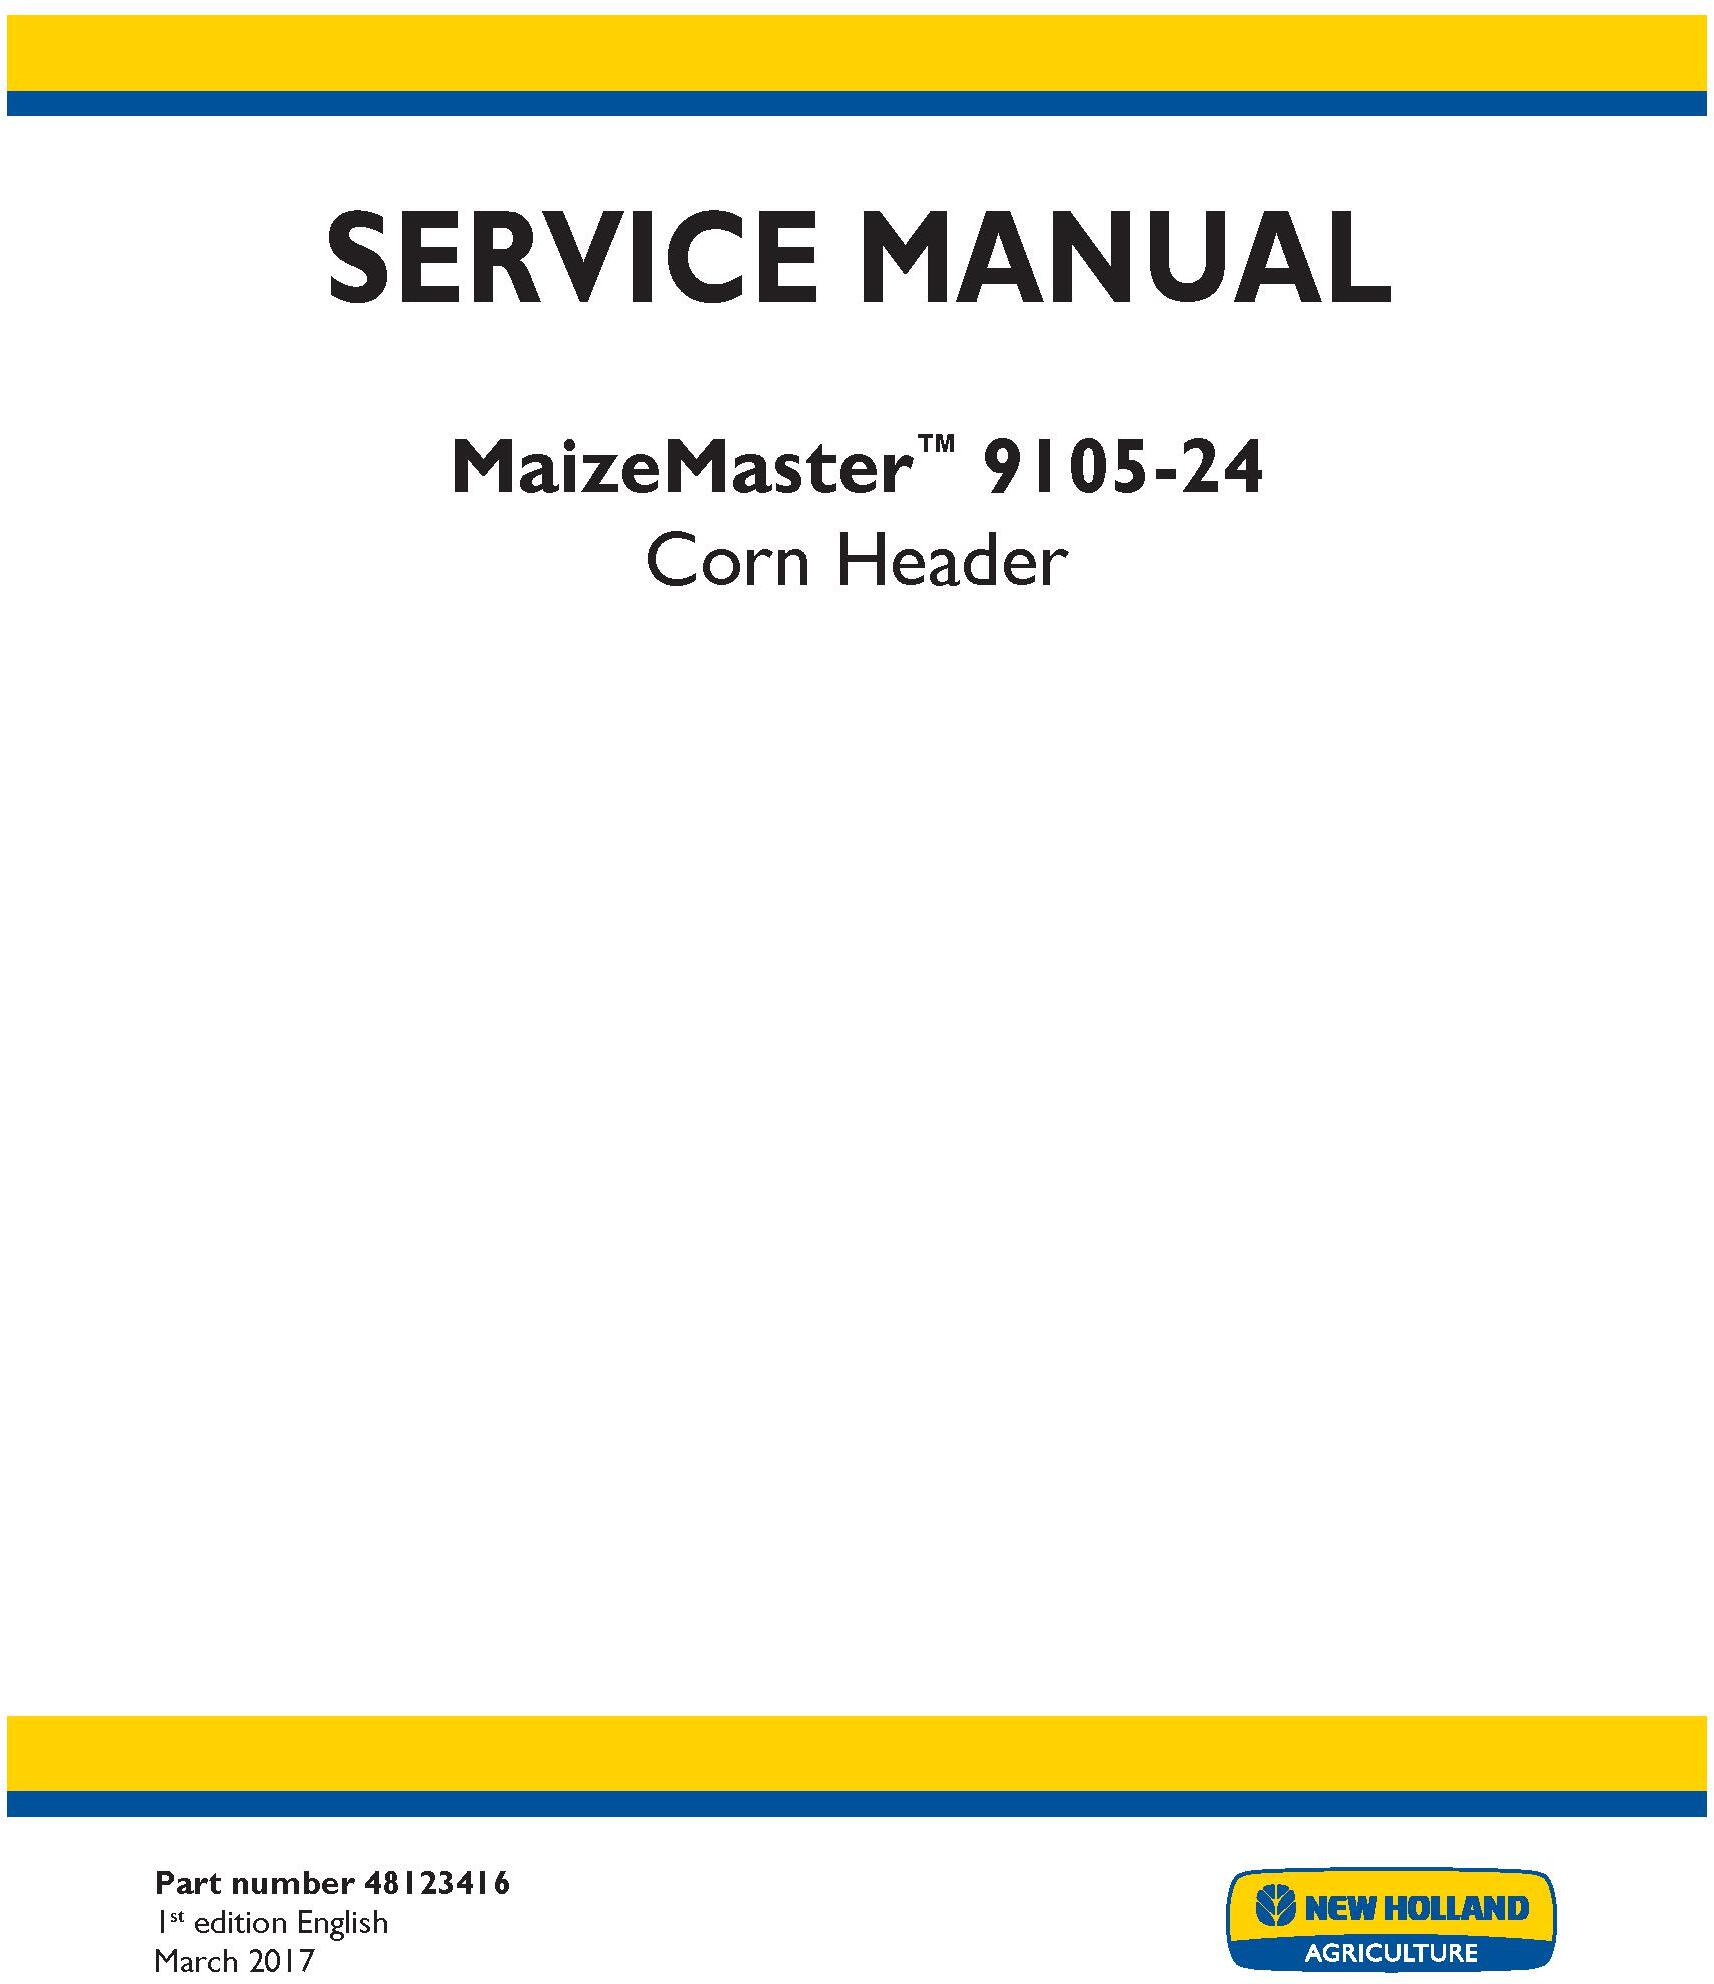 New Holland MaizeMaster 9105-24 Corn header Service Manual - 20047